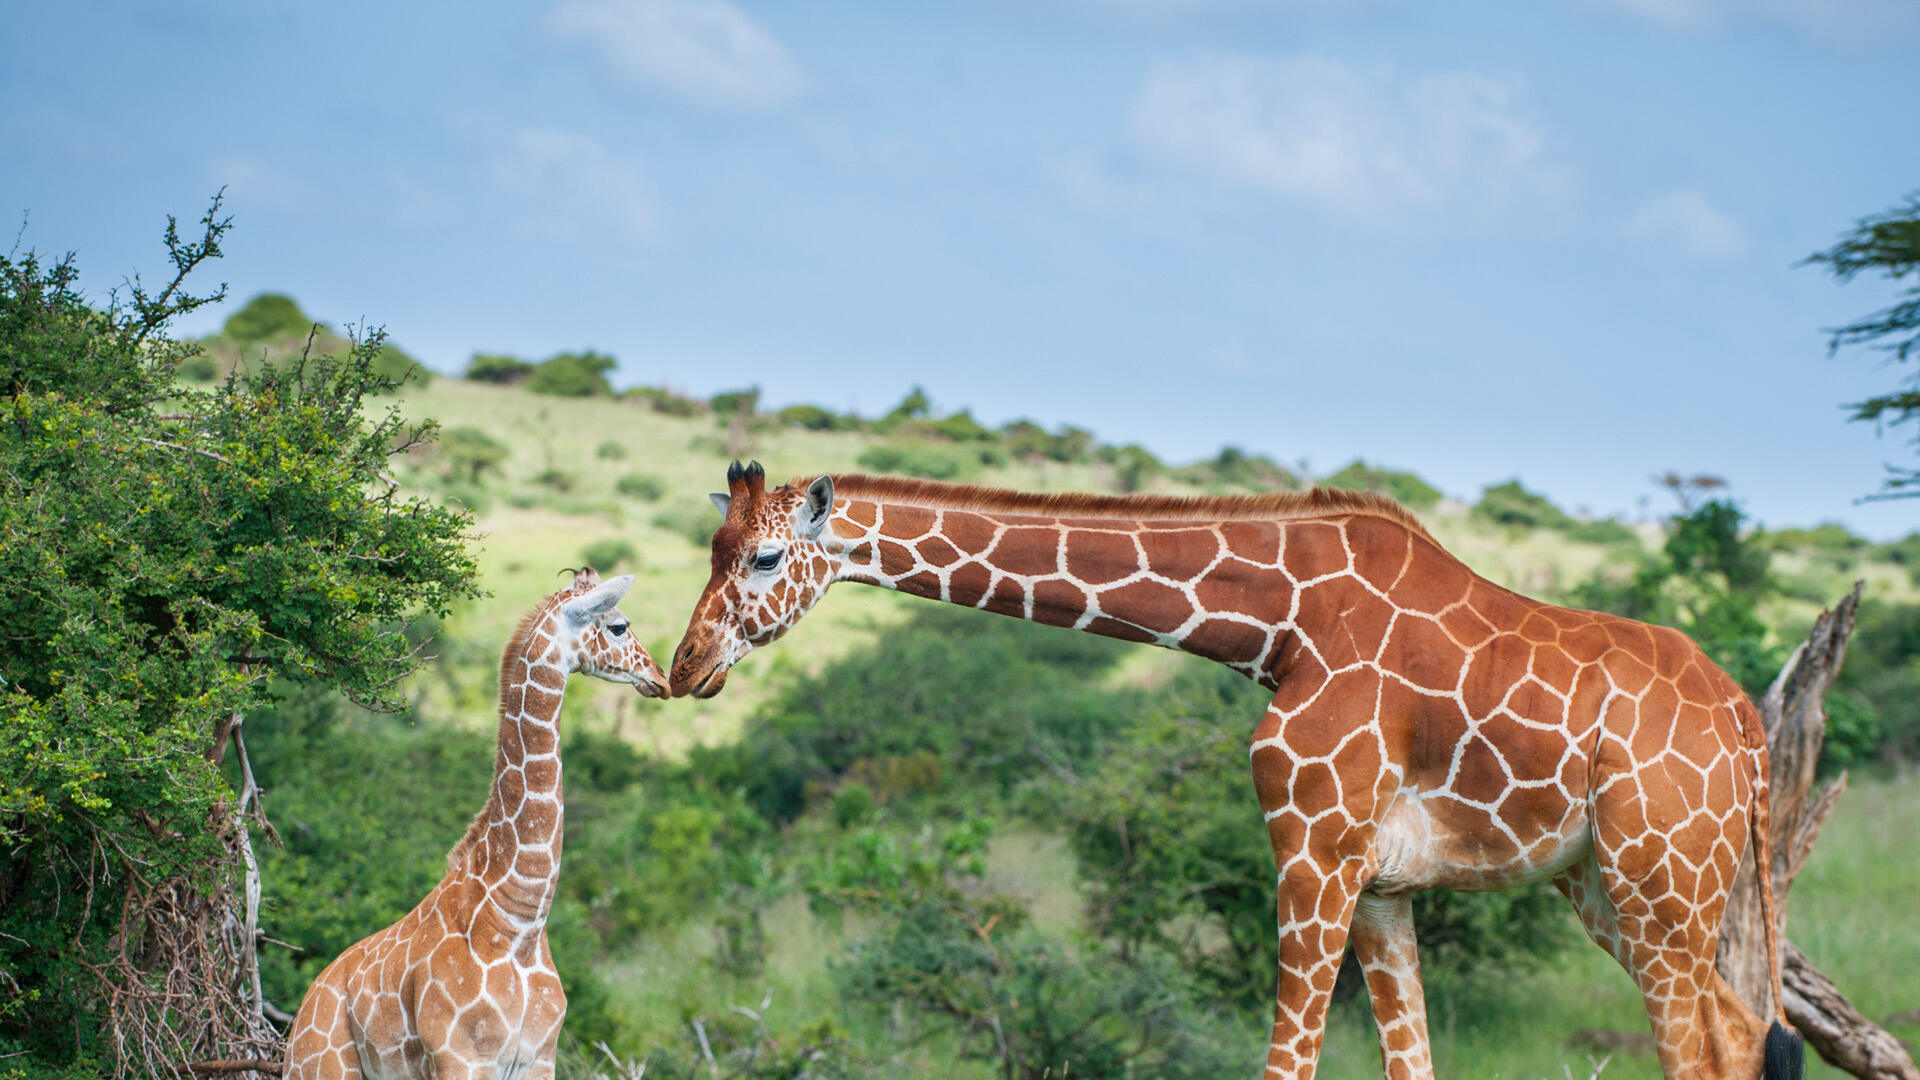 Reticulated giraffe mother greeting calf in Kenya